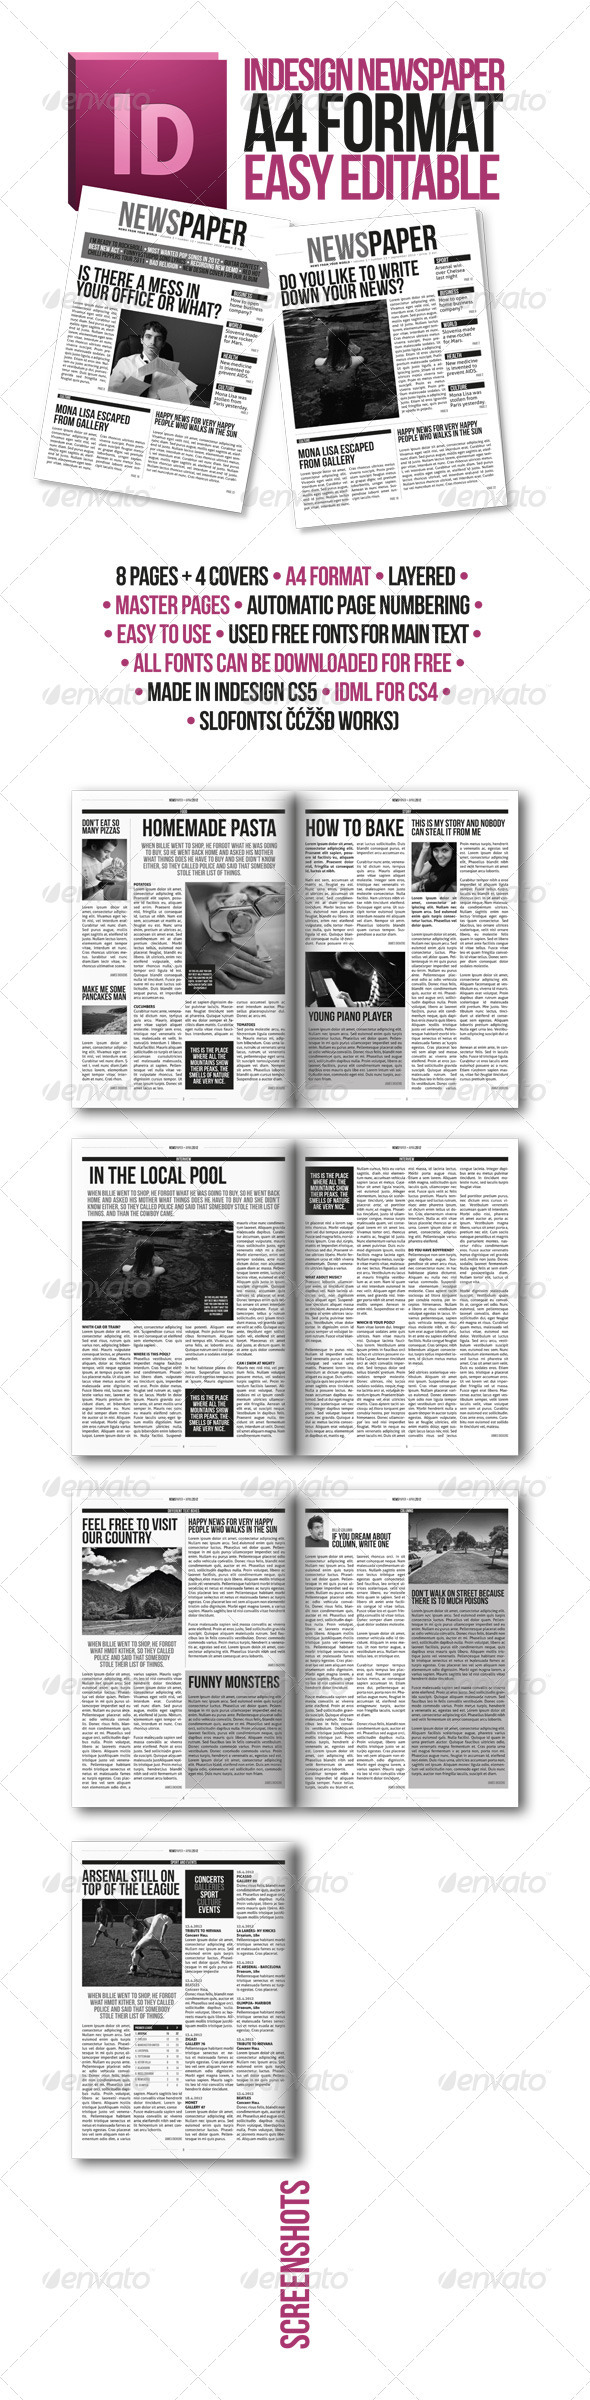 Indesign Modern Newspaper Magazine Template By Zigazi Graphicriver